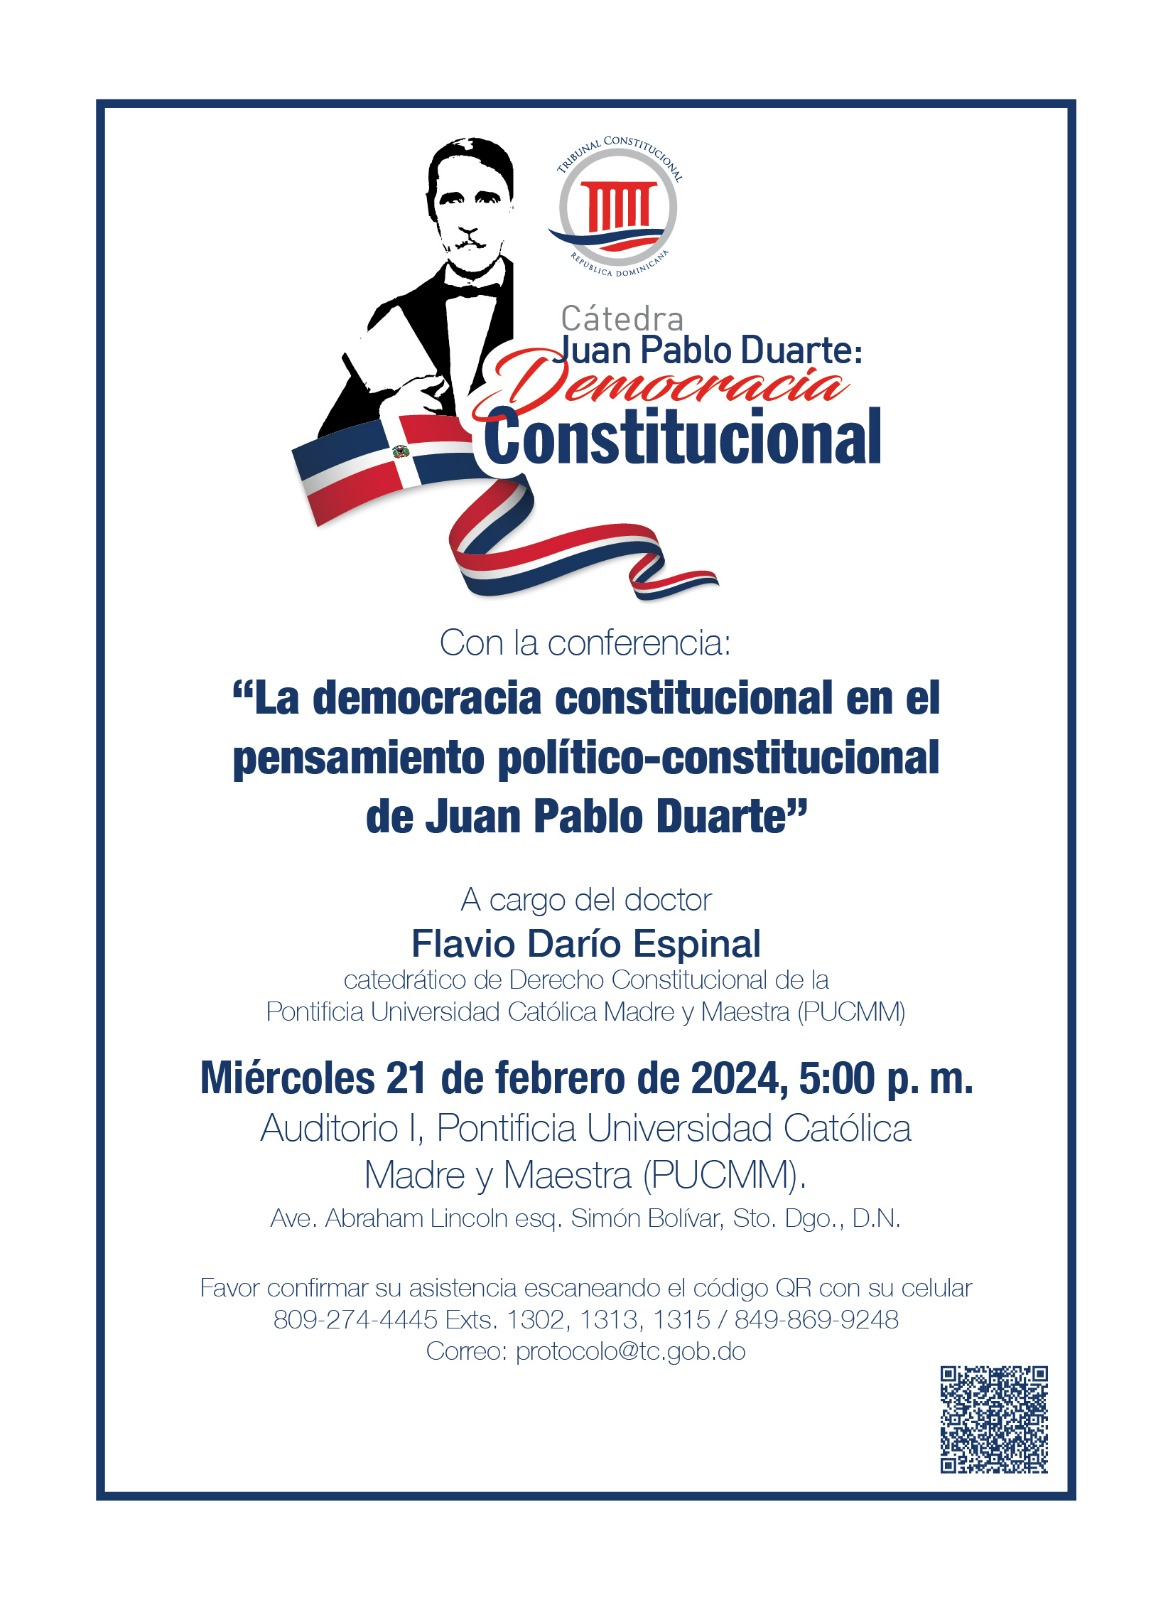 Imagen de Cátedra Juan Pablo Duarte: Democracia Constitucional.